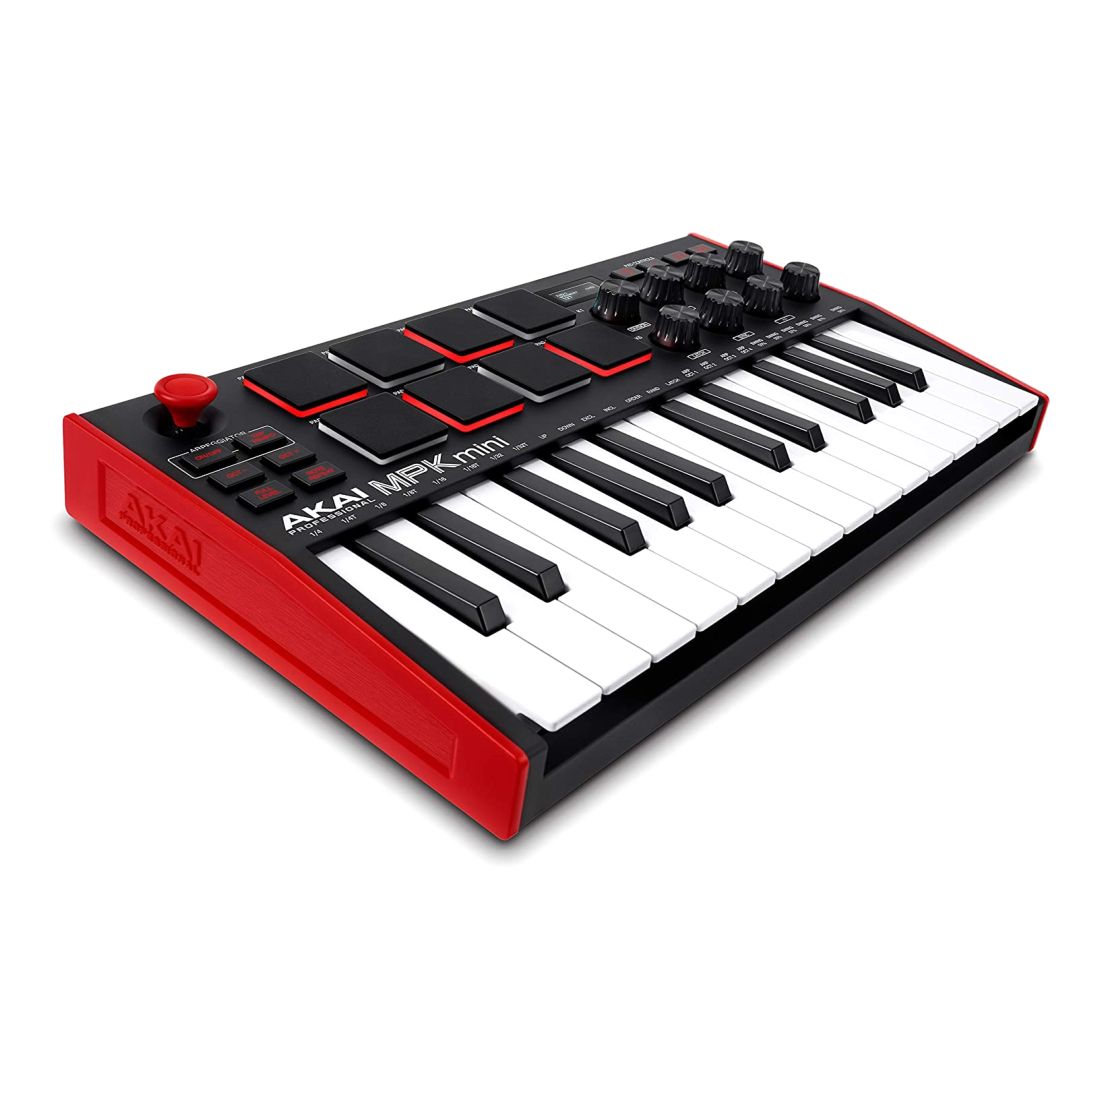 MIDI-контроллер клавиатуры Akai MPK3 Mini MK3 25-клавишный, черный летняя скидка 50% профессиональный mpk mini mk3 25 клавиш usb midi контроллер клавиатуры лидер продаж